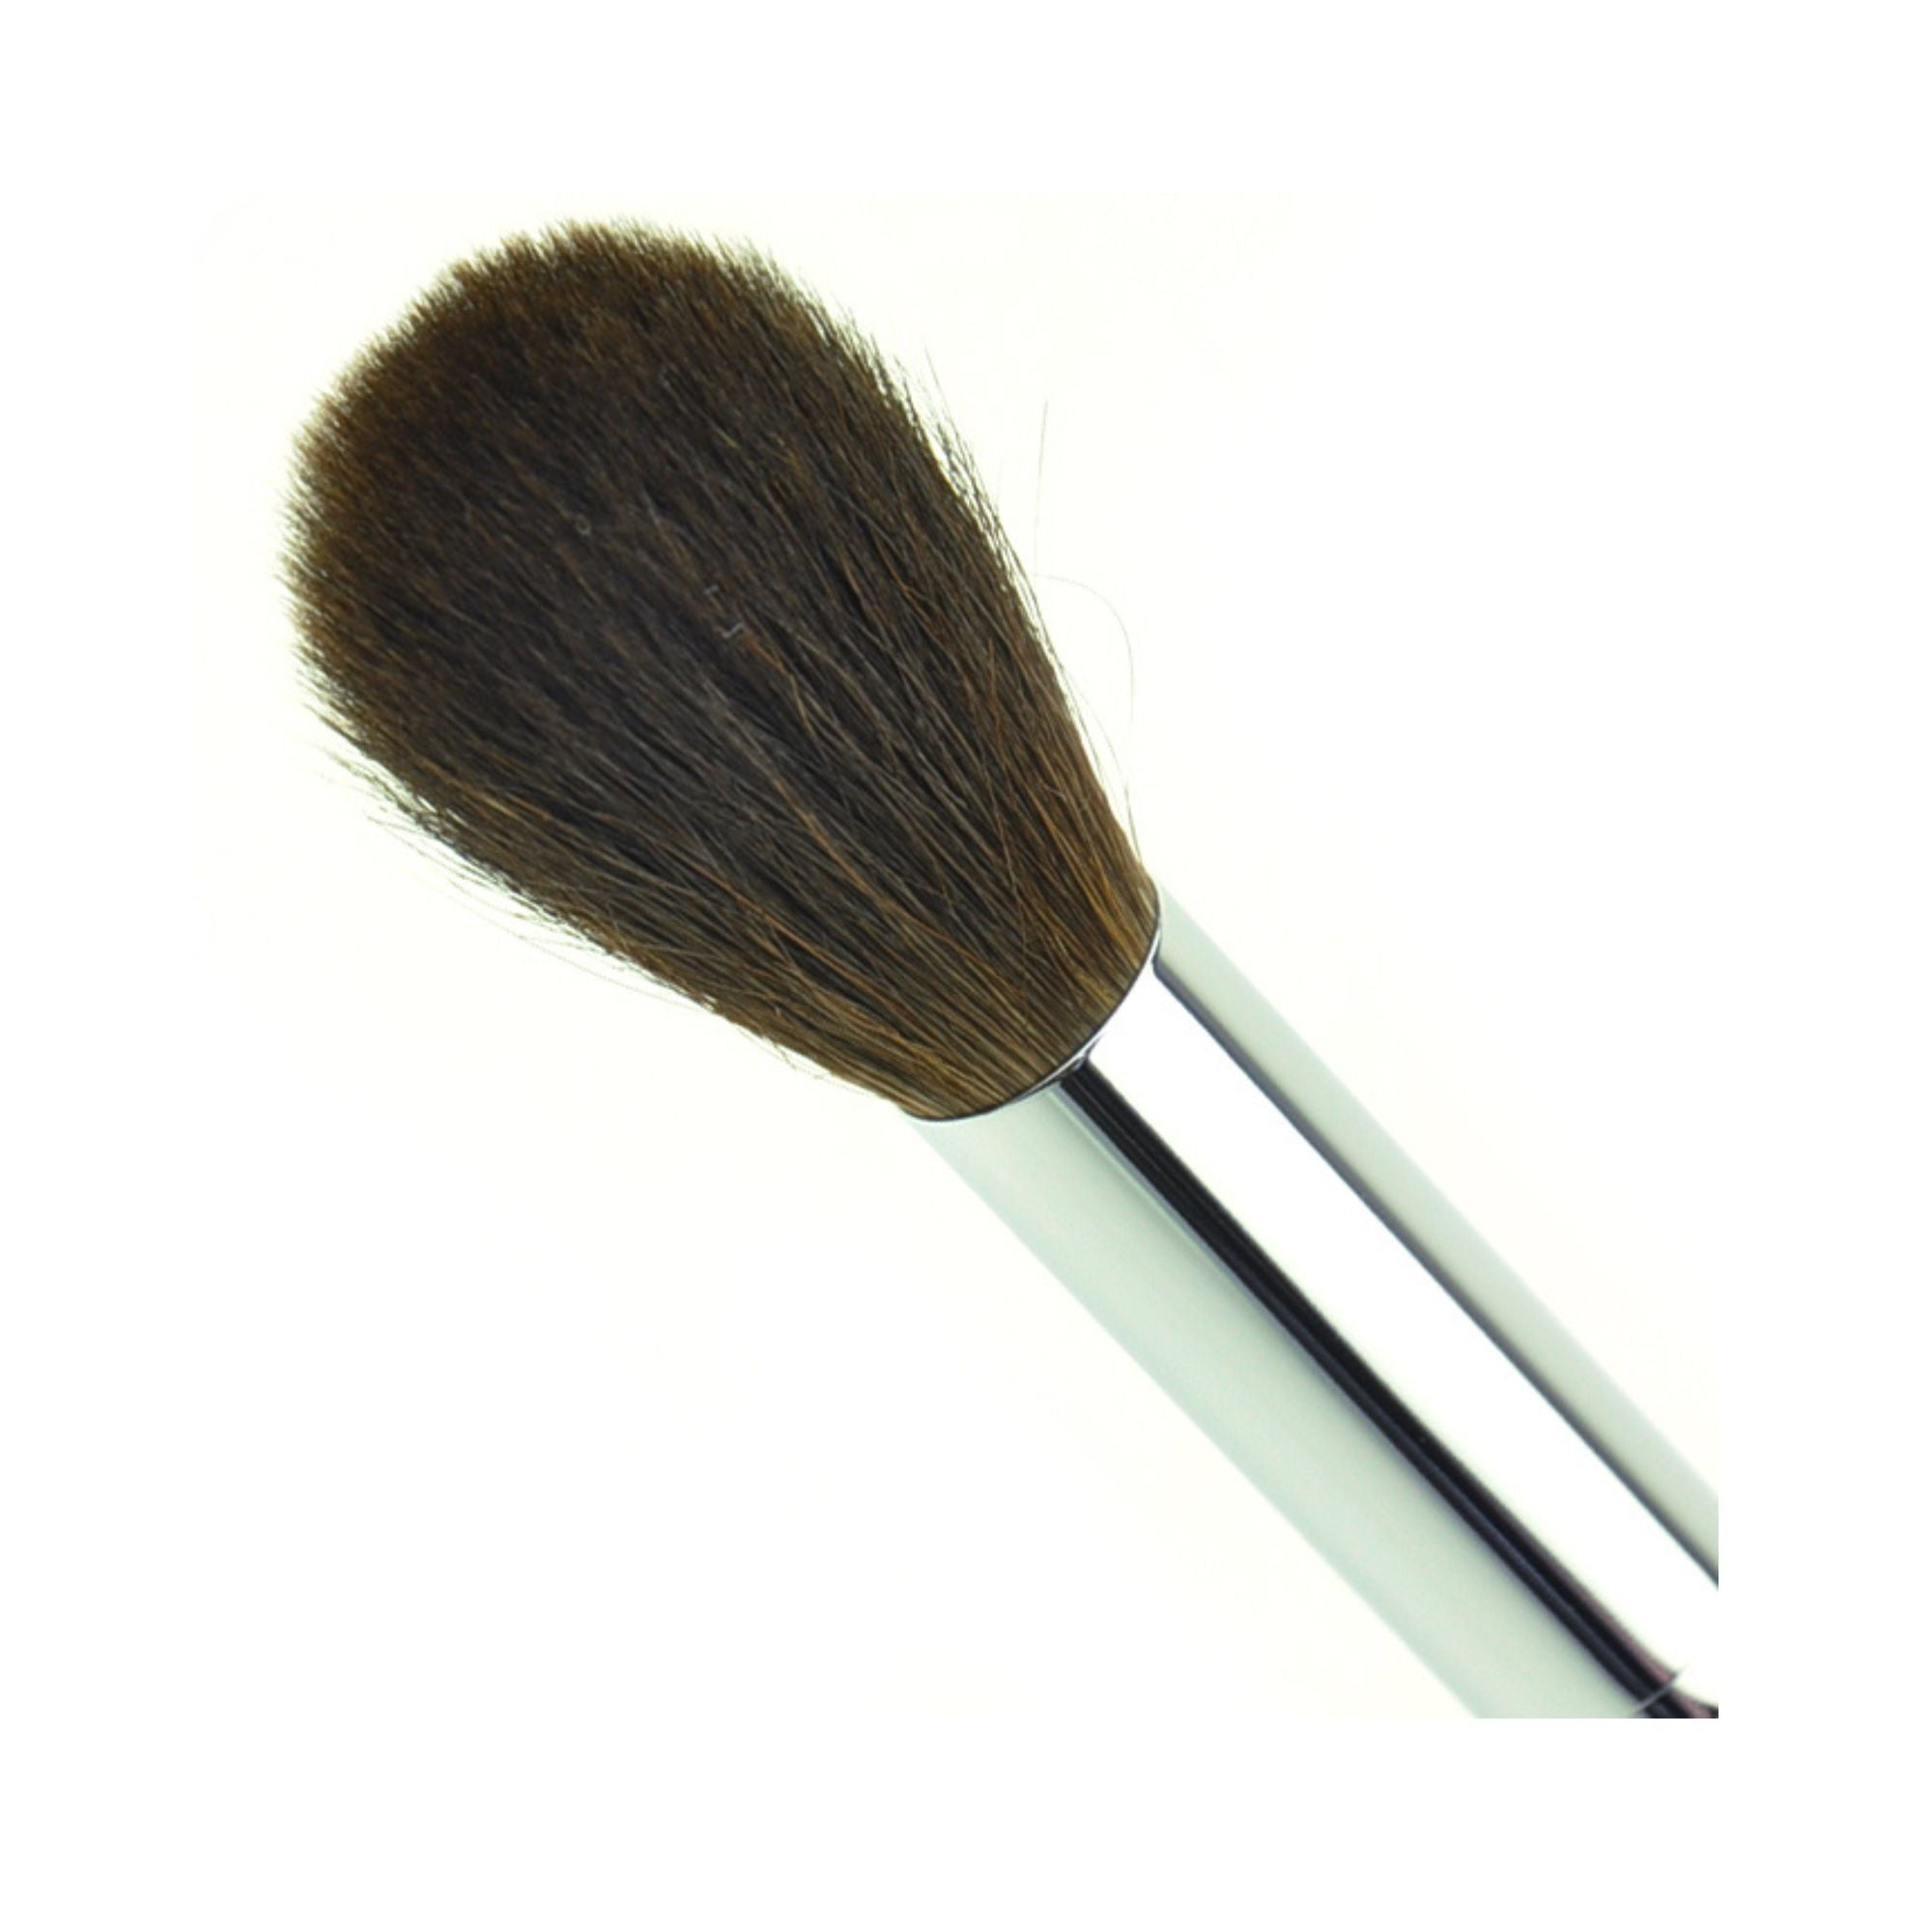 Tanseido YSC17 Cheek Brush - Fude Beauty, Japanese Makeup Brushes